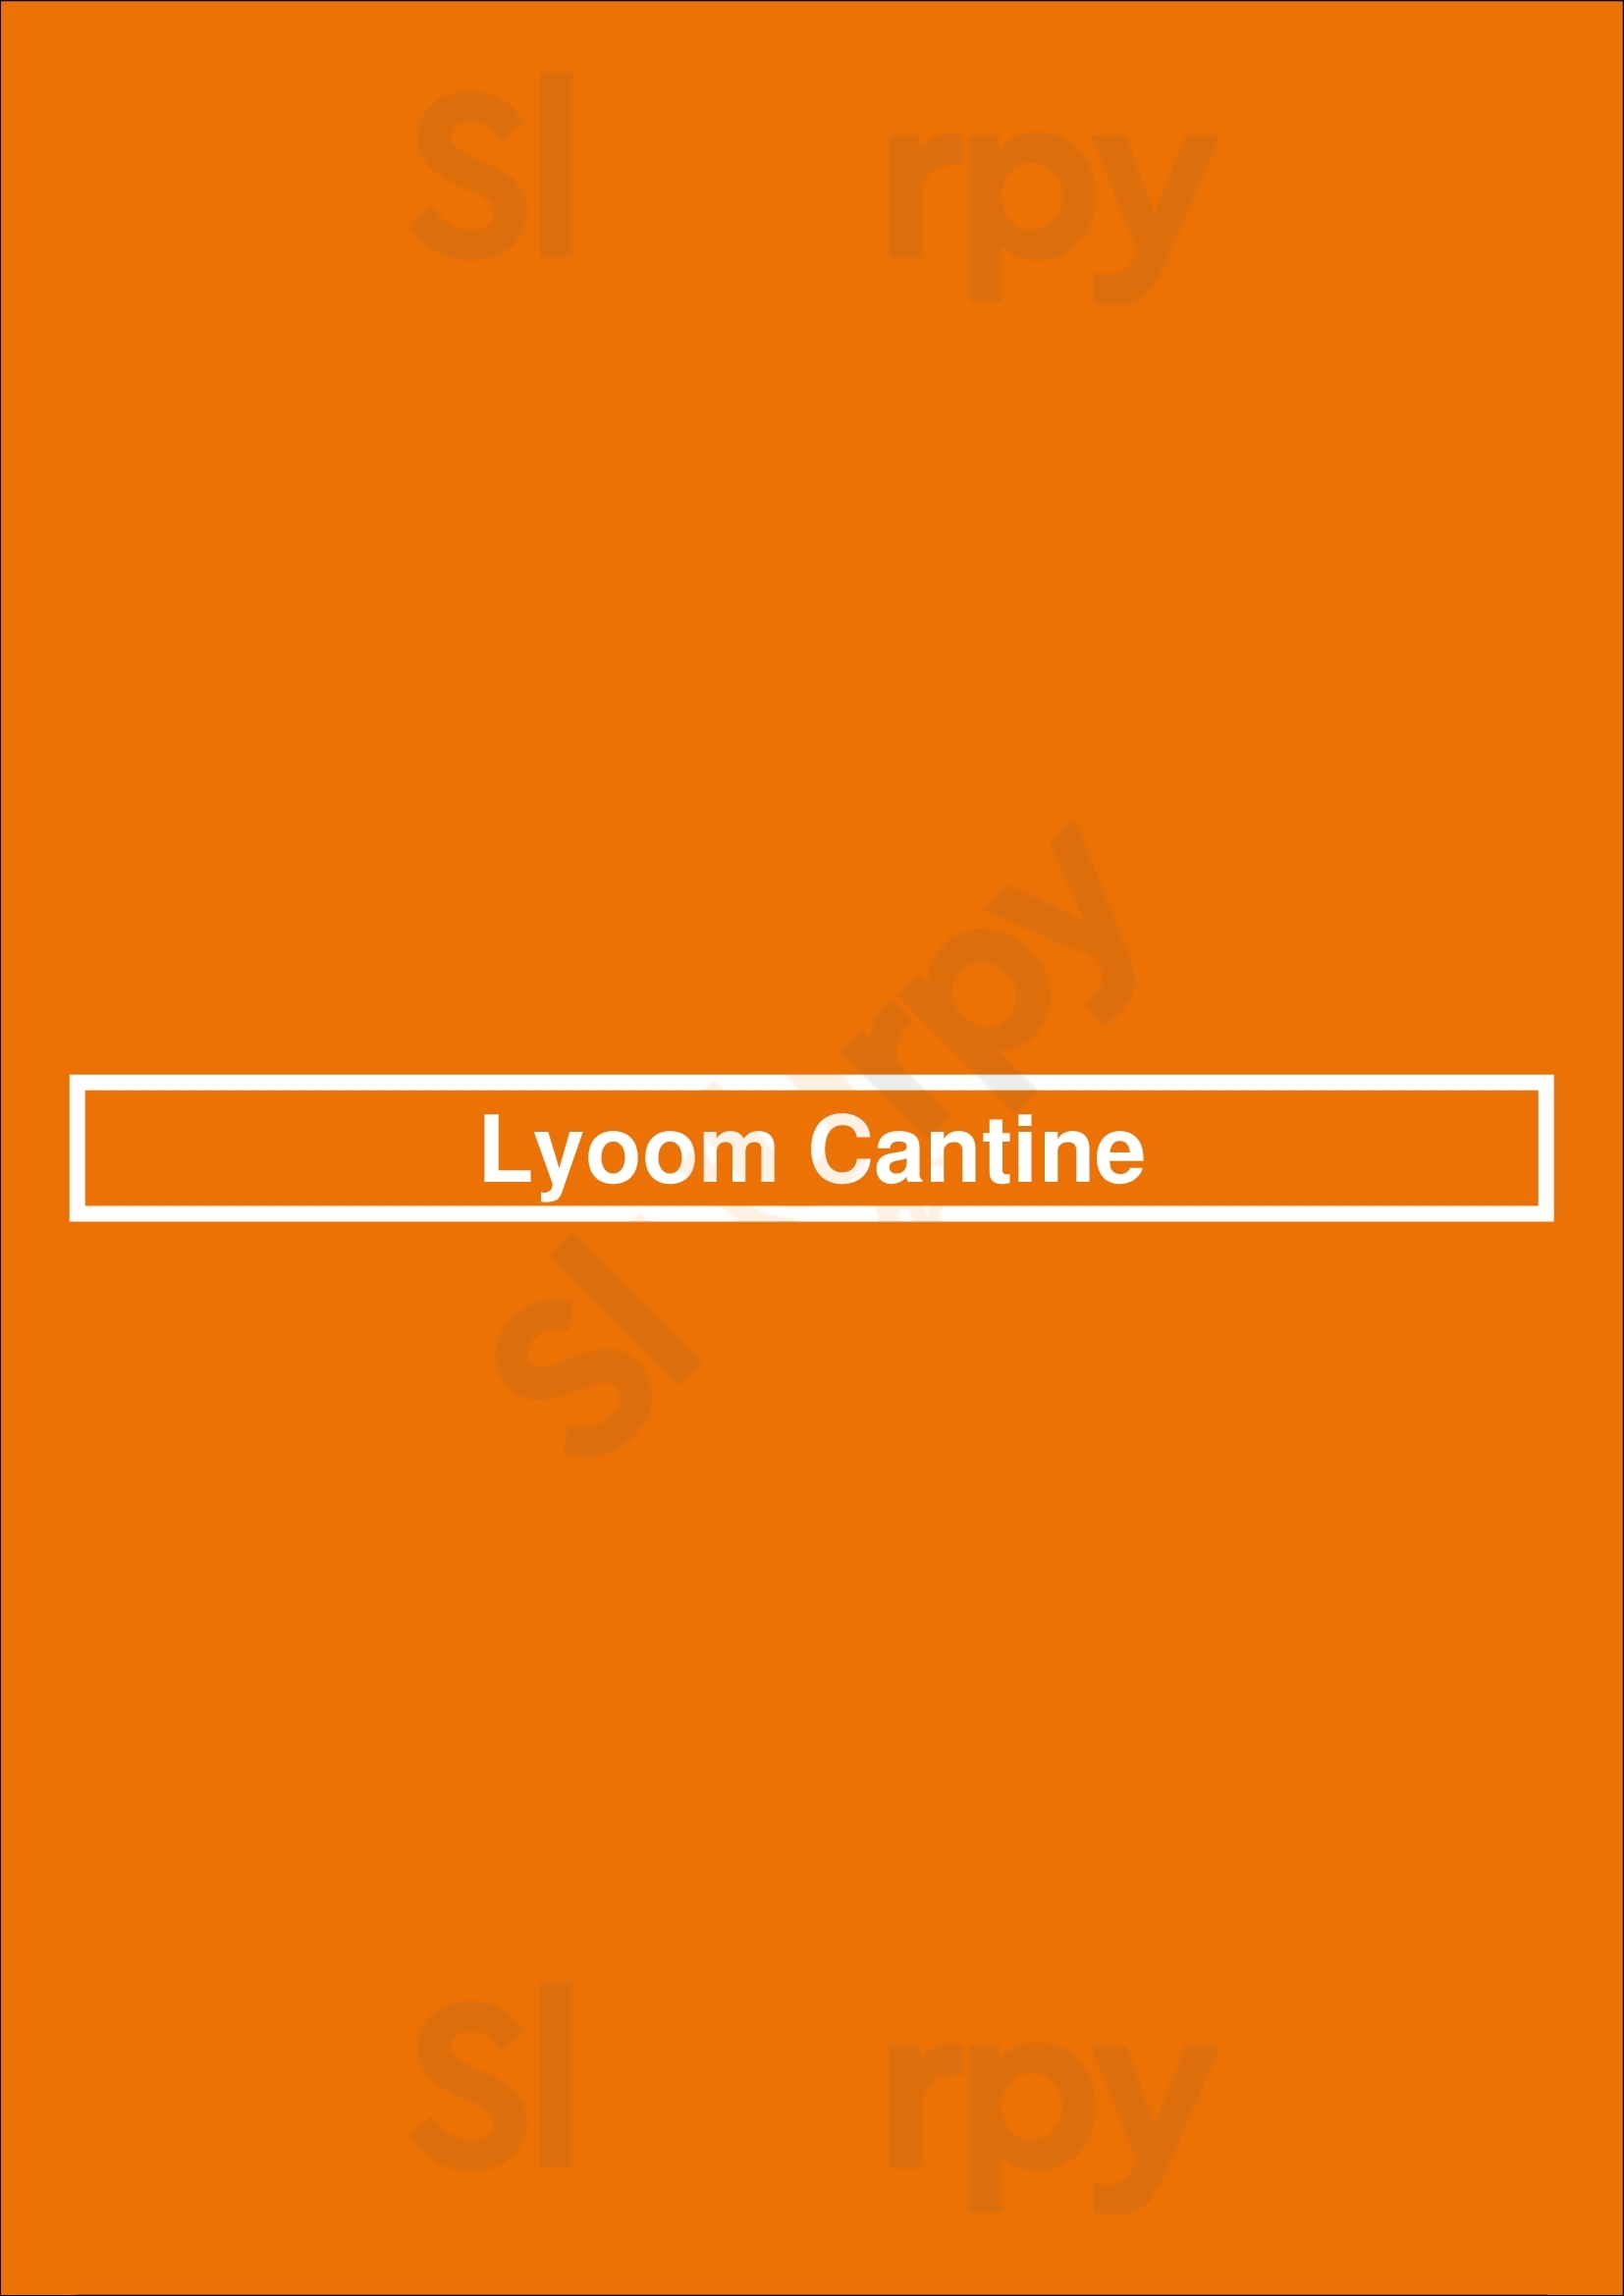 Lyoom Cantine Paris Menu - 1